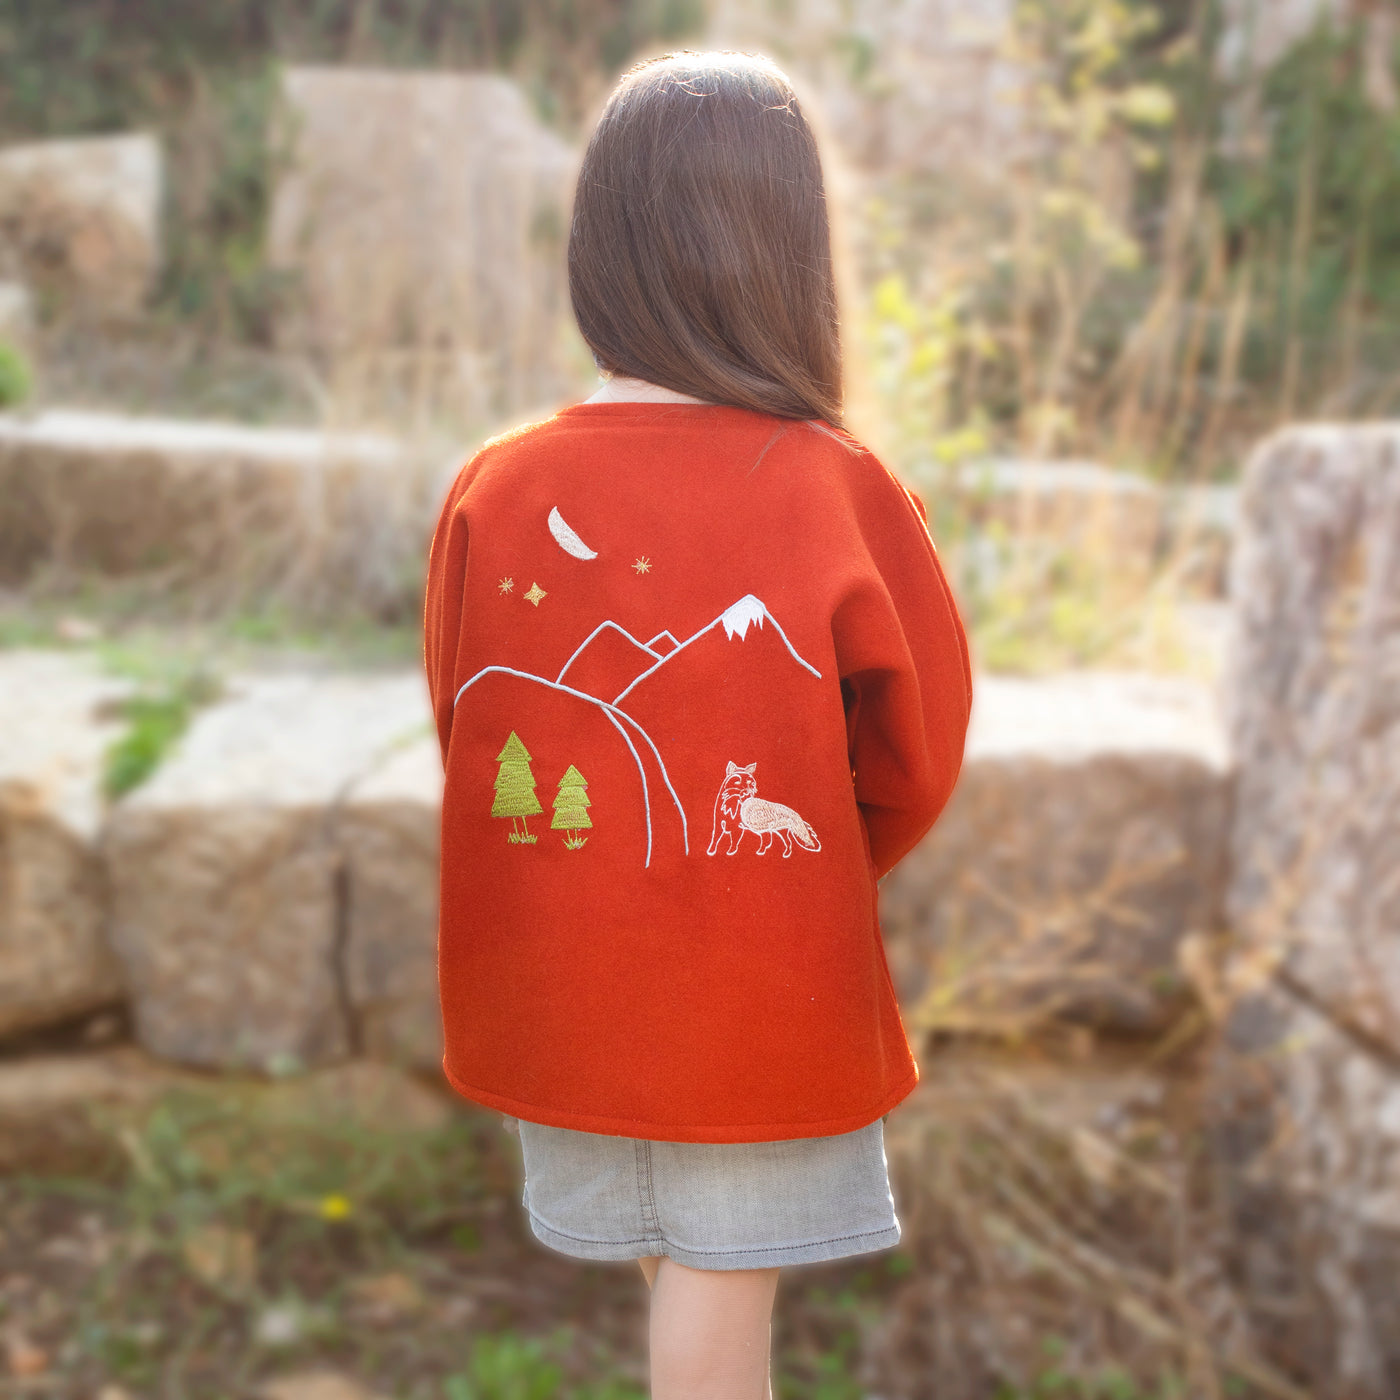 Orange jacket with embroidery